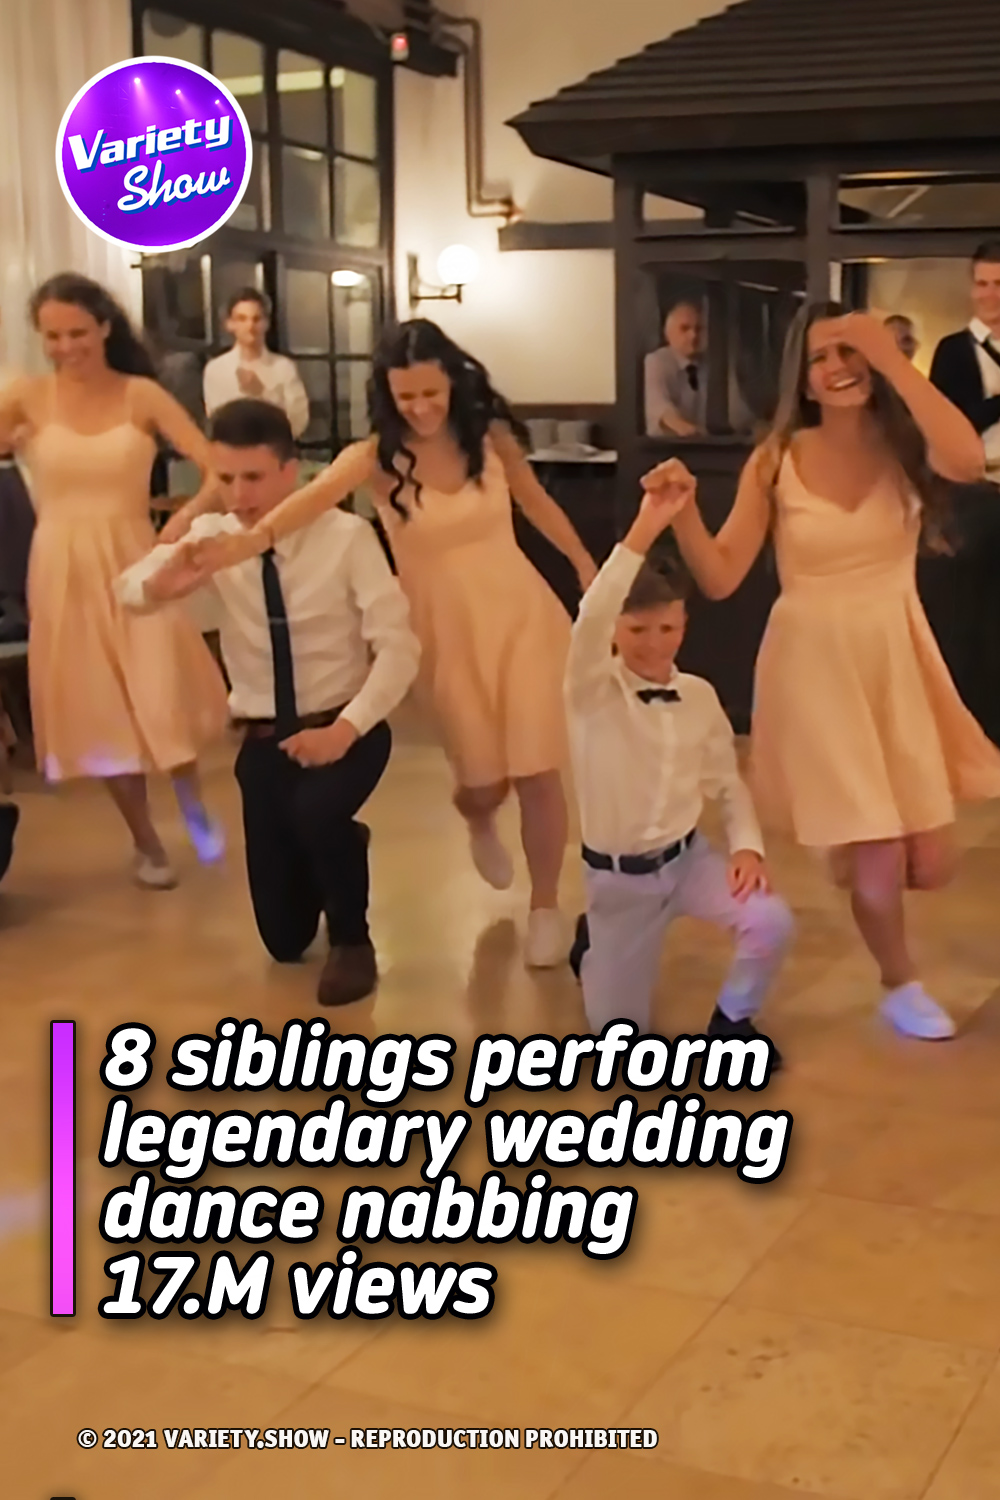 8 siblings perform legendary wedding dance nabbing 17.M views